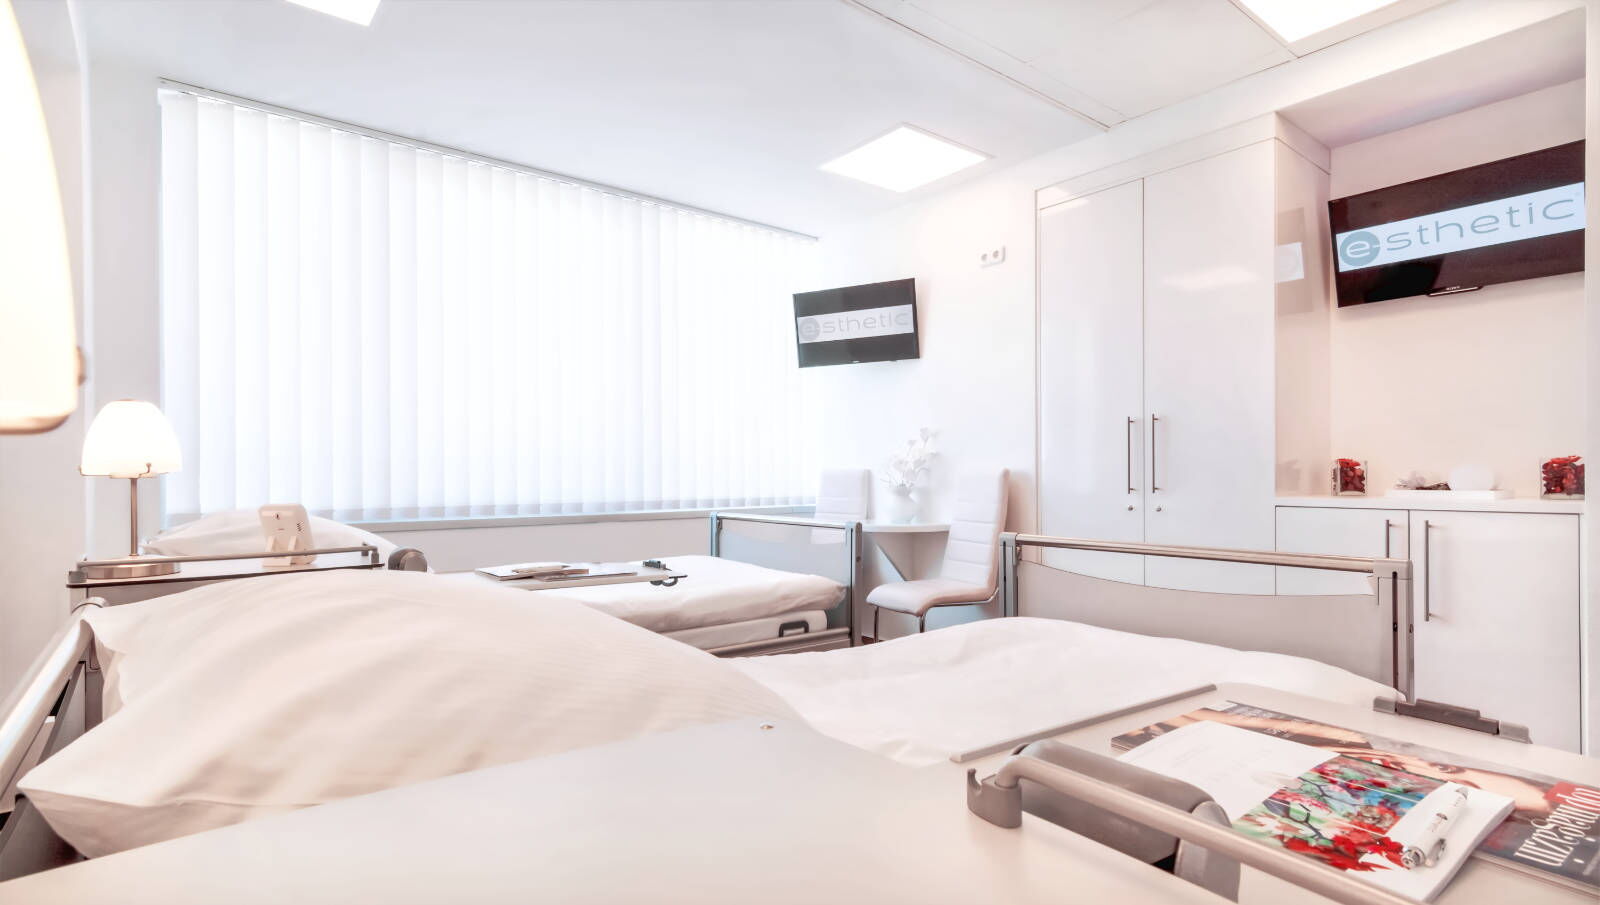 Komfortabel ausgestattete Patientenzimmer bei e-sthetic